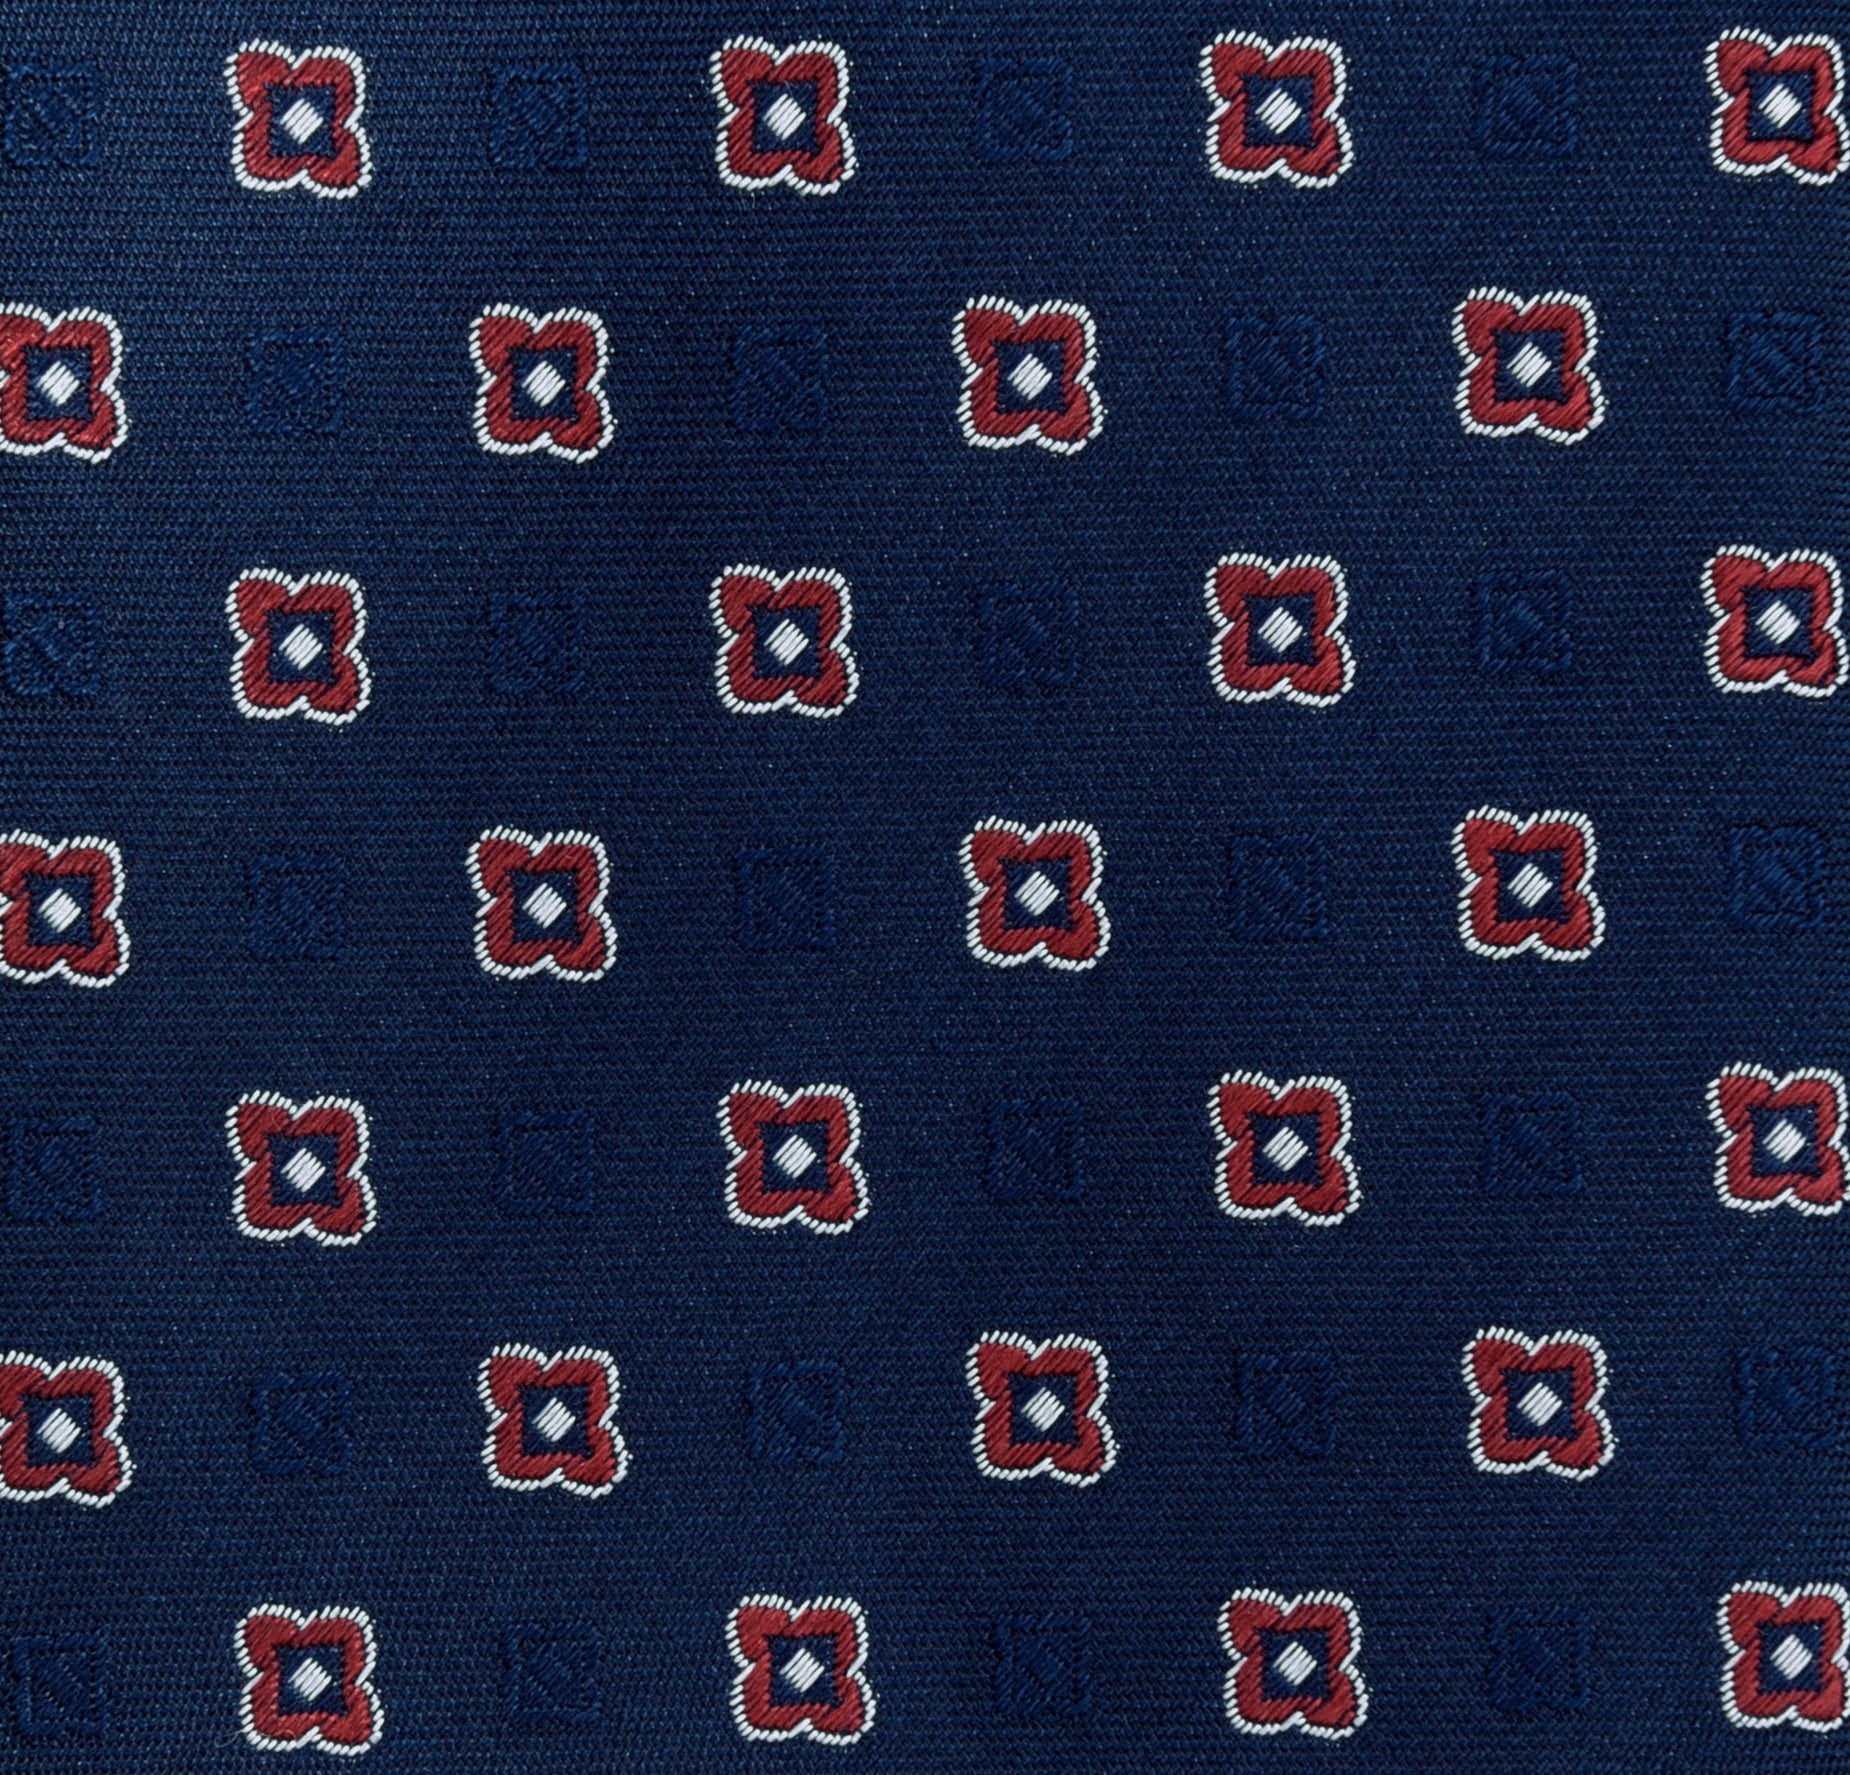 | blau blau | strukturiert | royal royal 1AC00350-01-51-142 142 Krawatte in